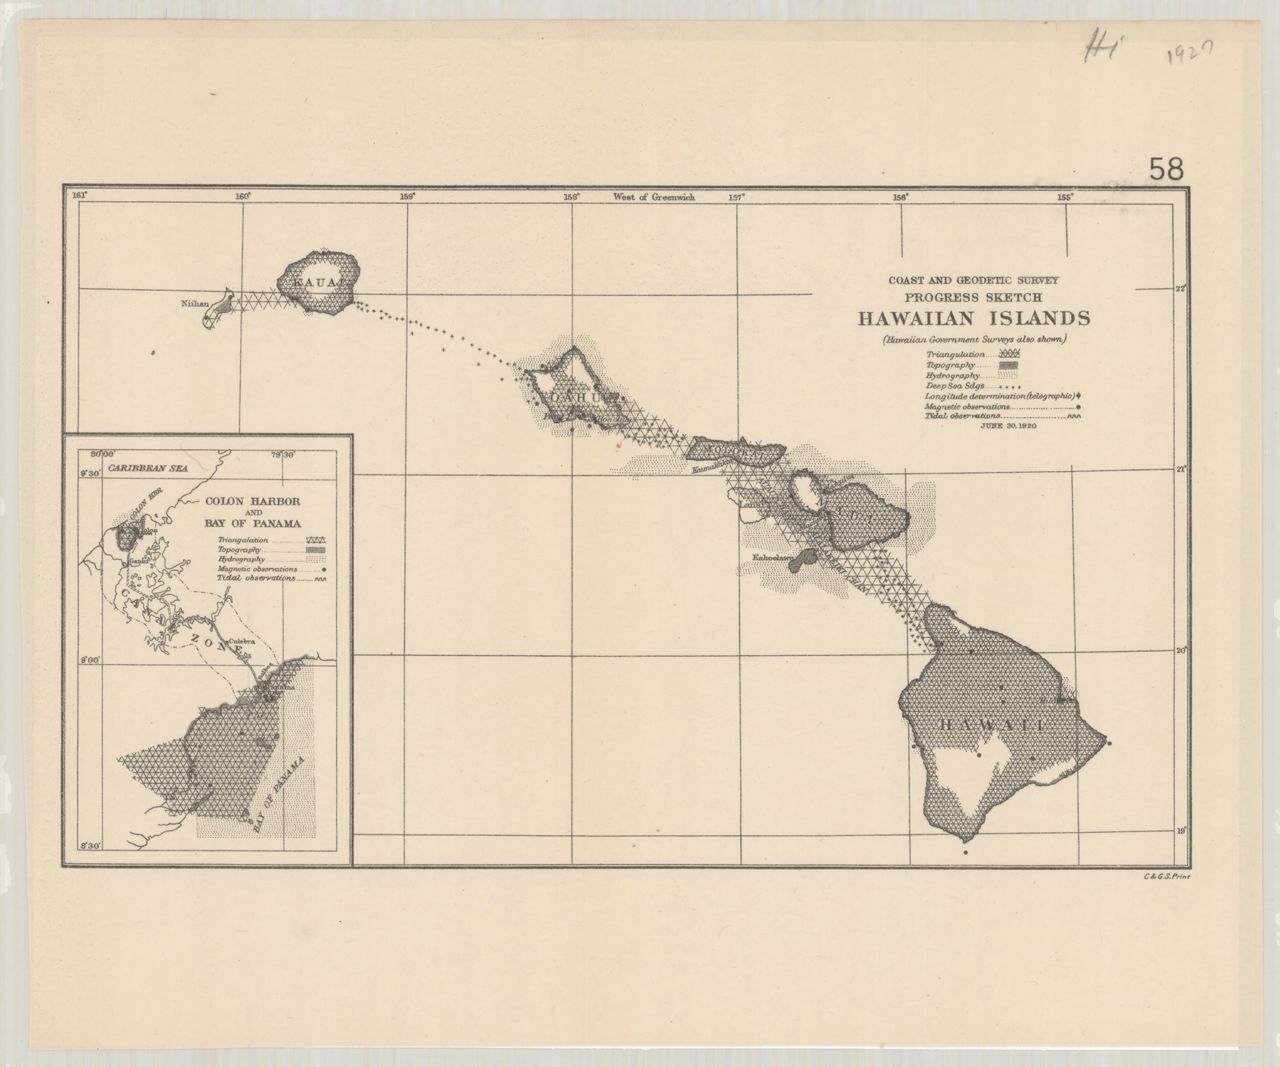 1920 Hawaiian Islands, Coast and Geodetic Survey, Progress Sketch